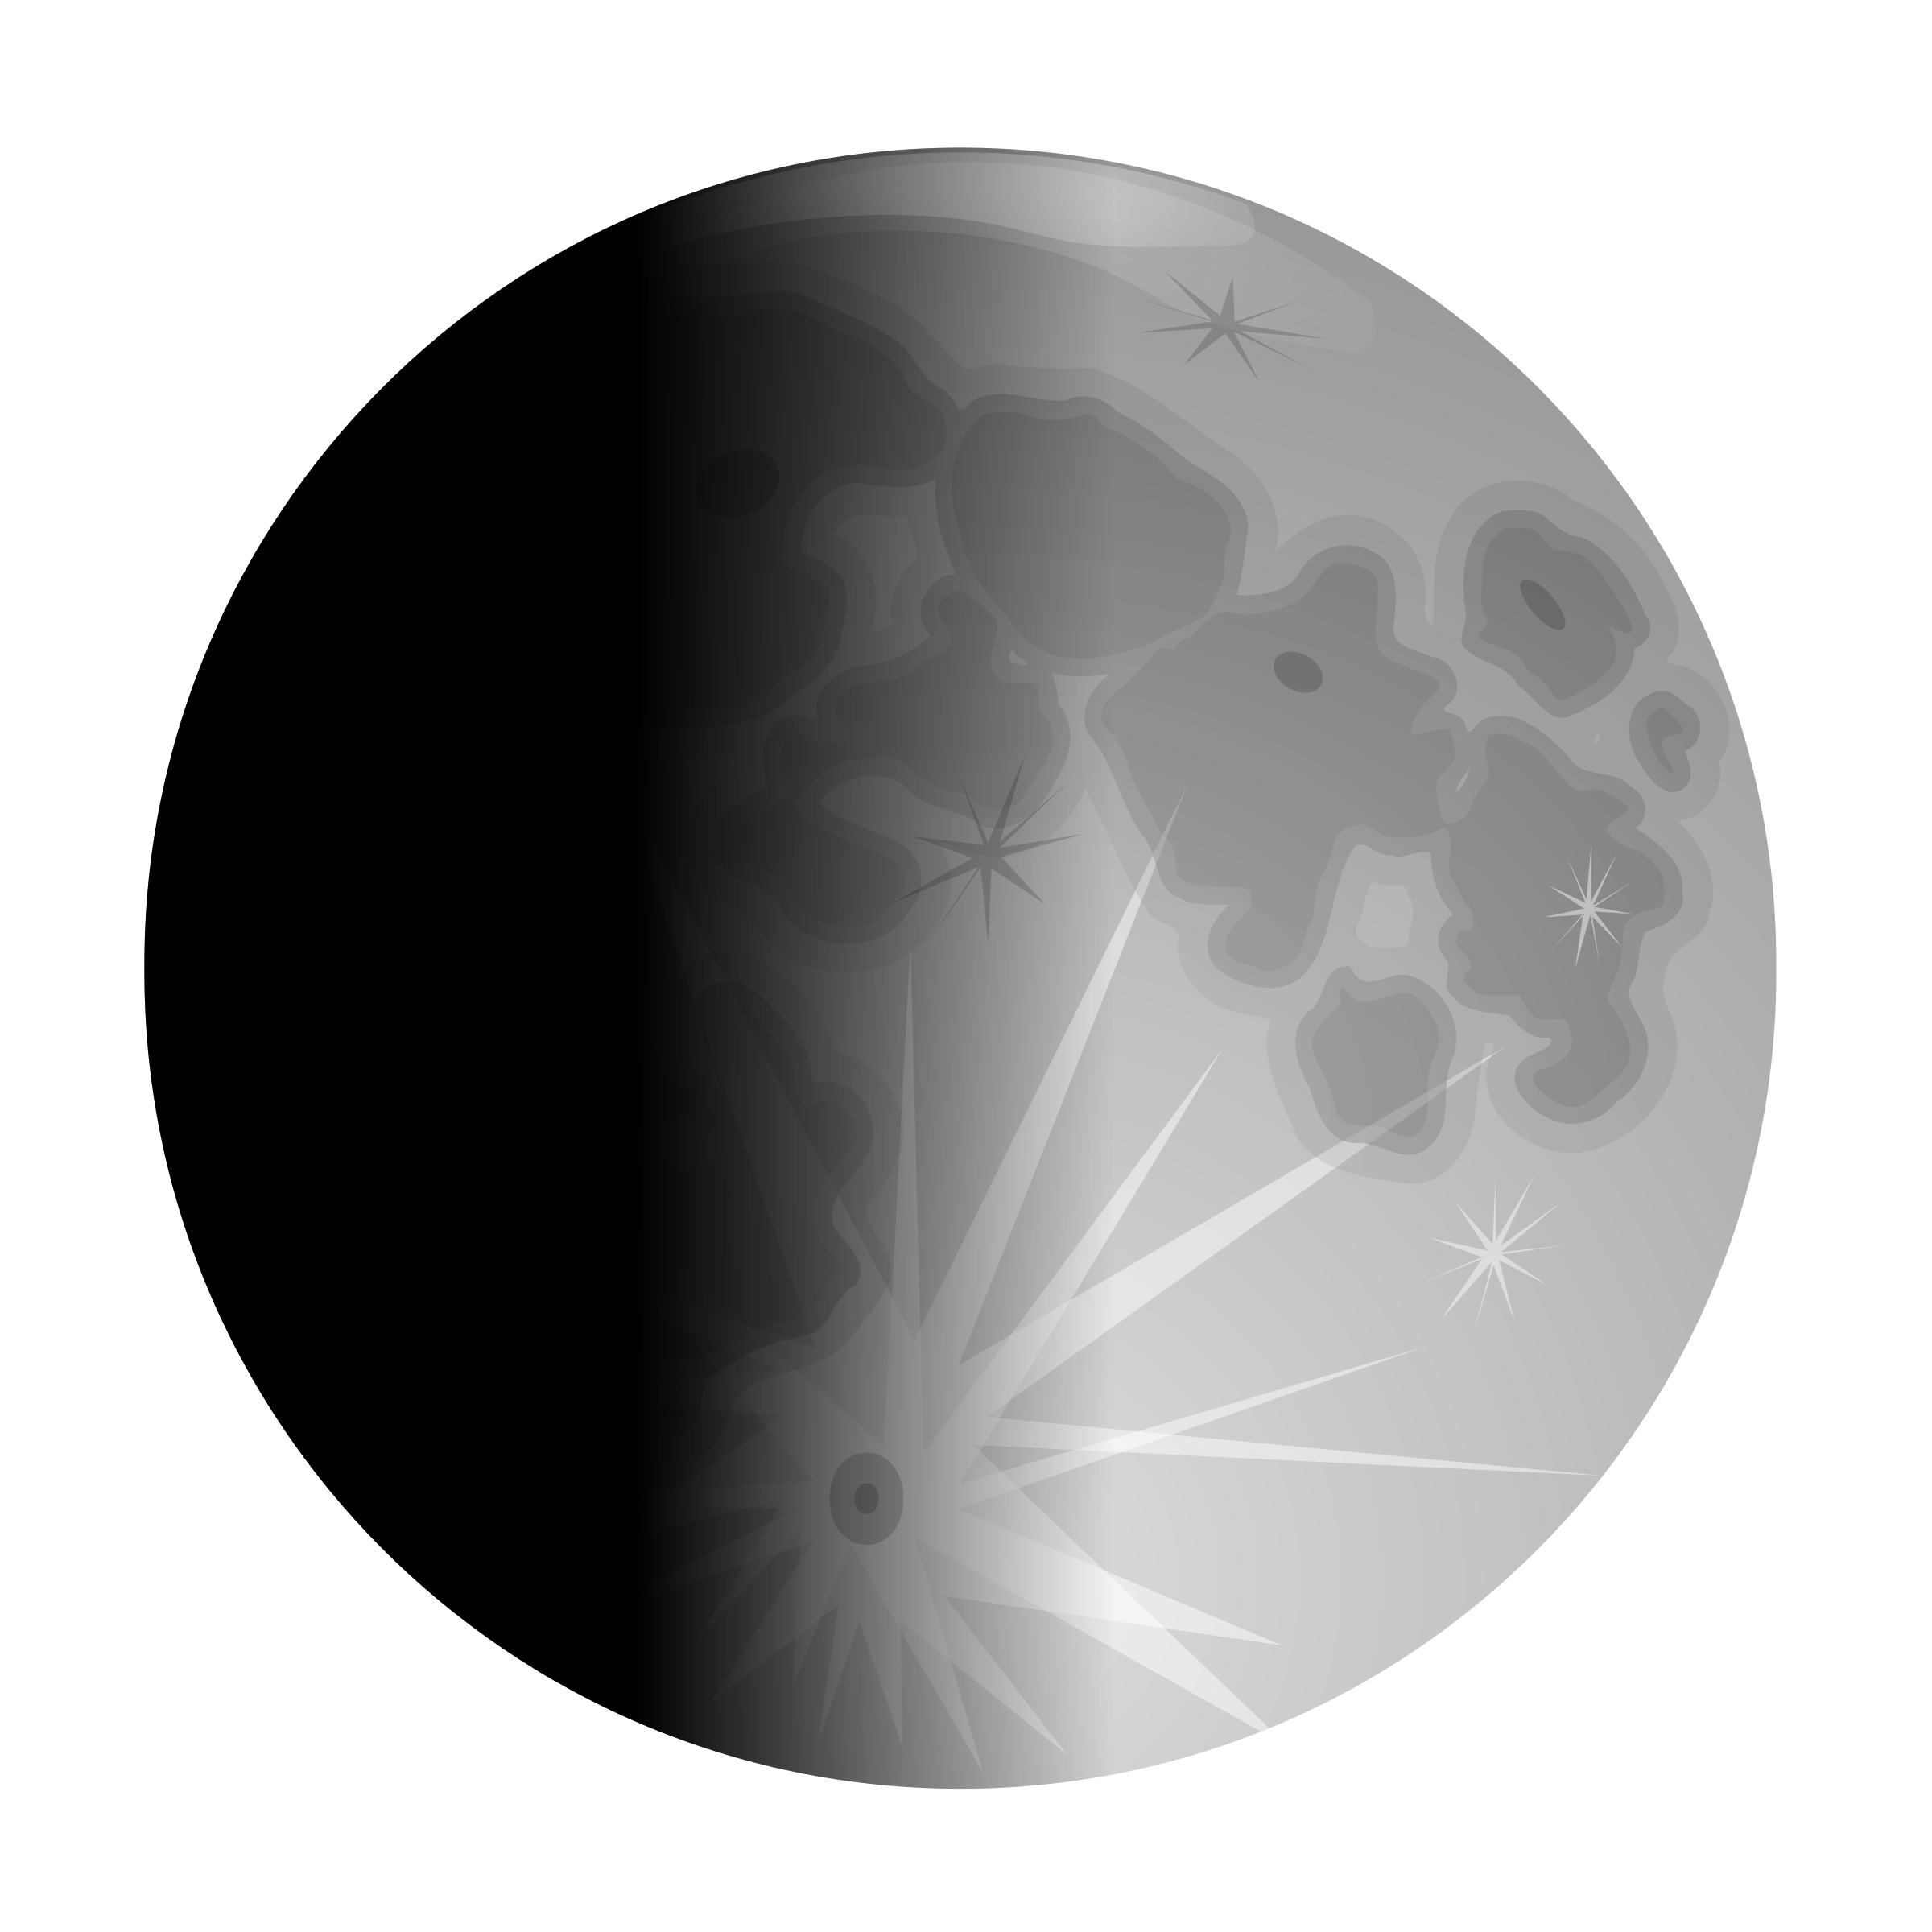 universe clipart moon